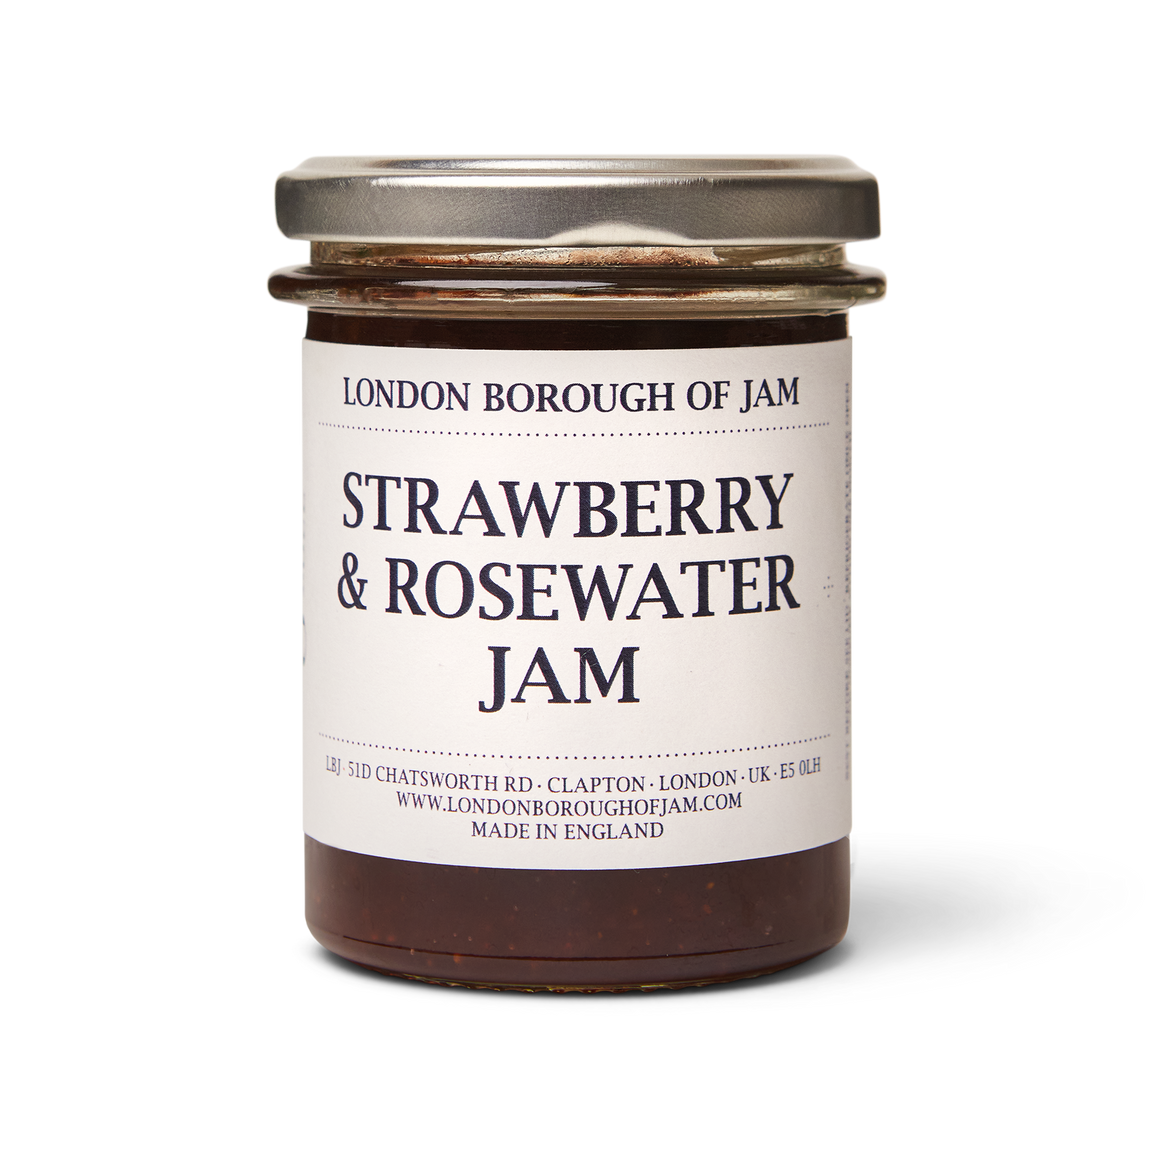 Strawberry & Rosewater Jam